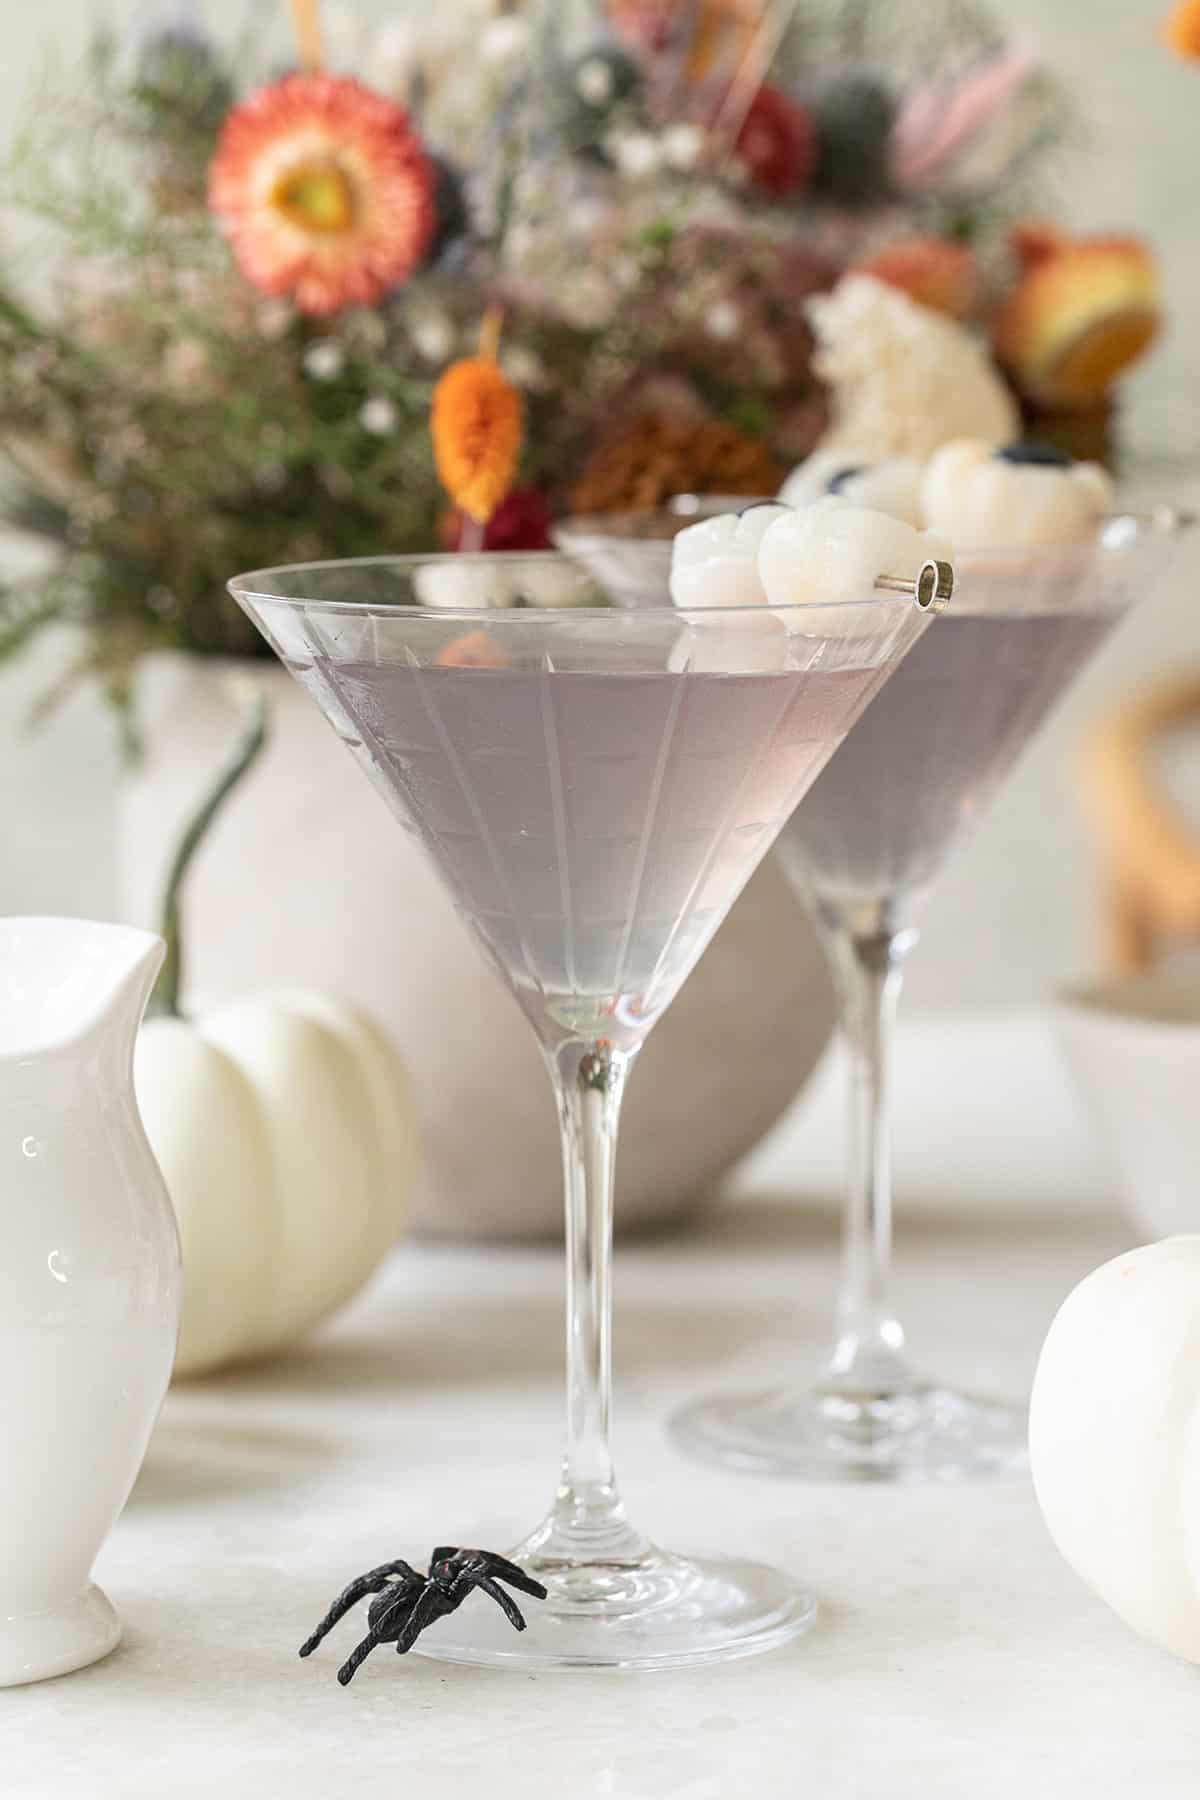 Halloween martini with a purple hue.